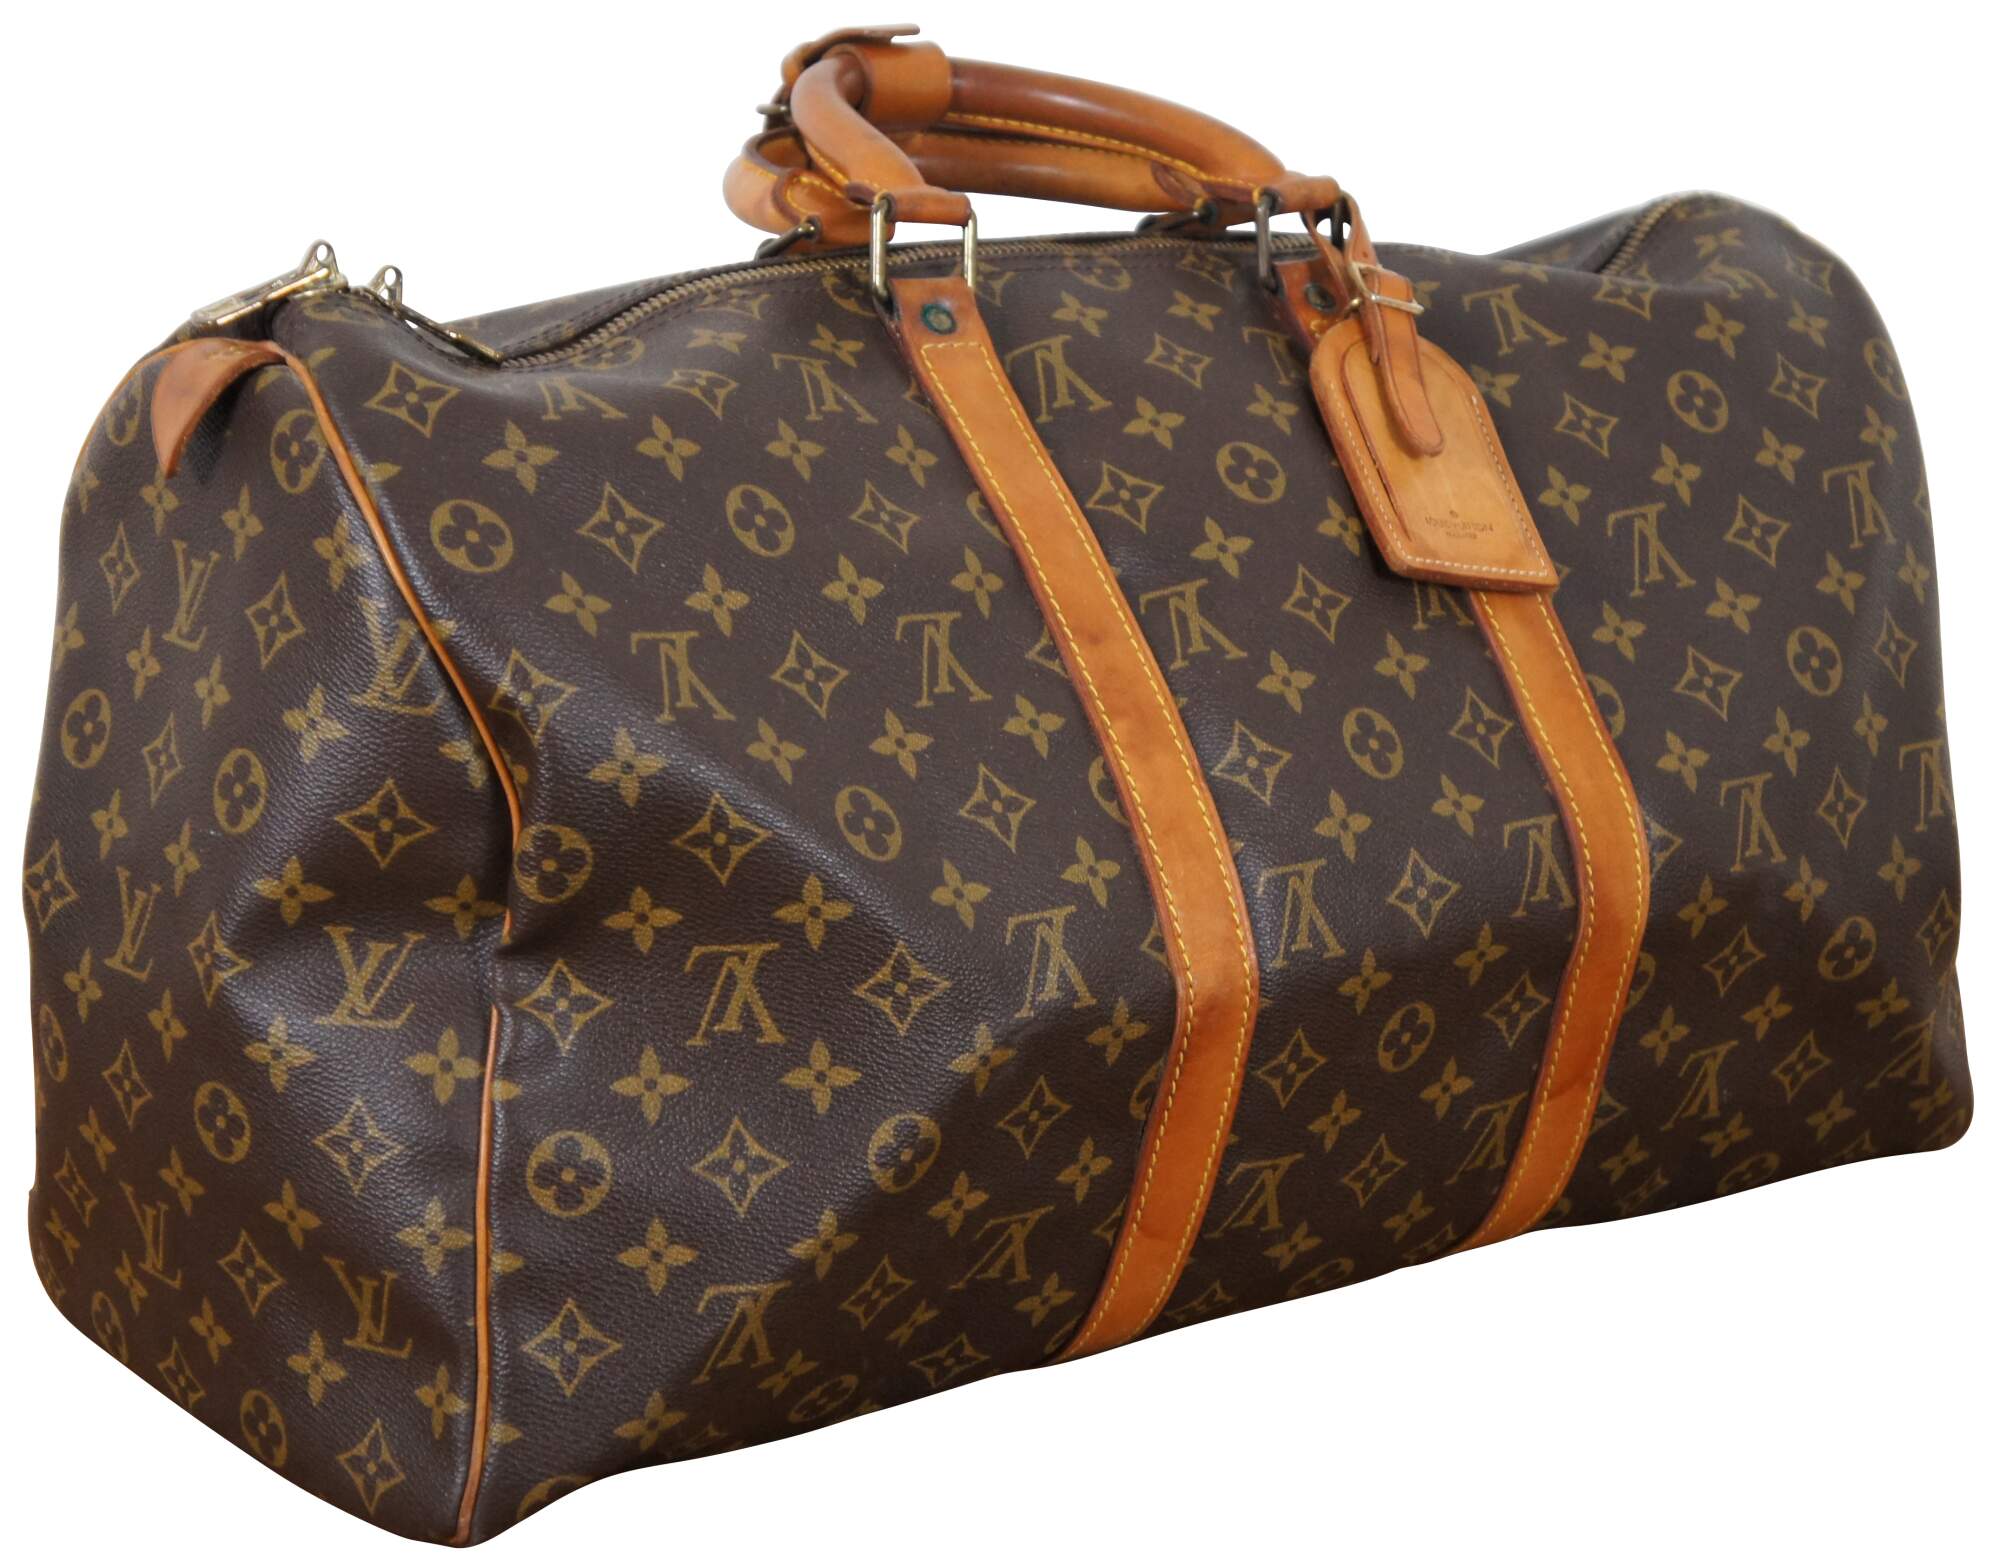 Louis Vuitton Malletier Keepall 45 Monogram Canvas Travel Bag